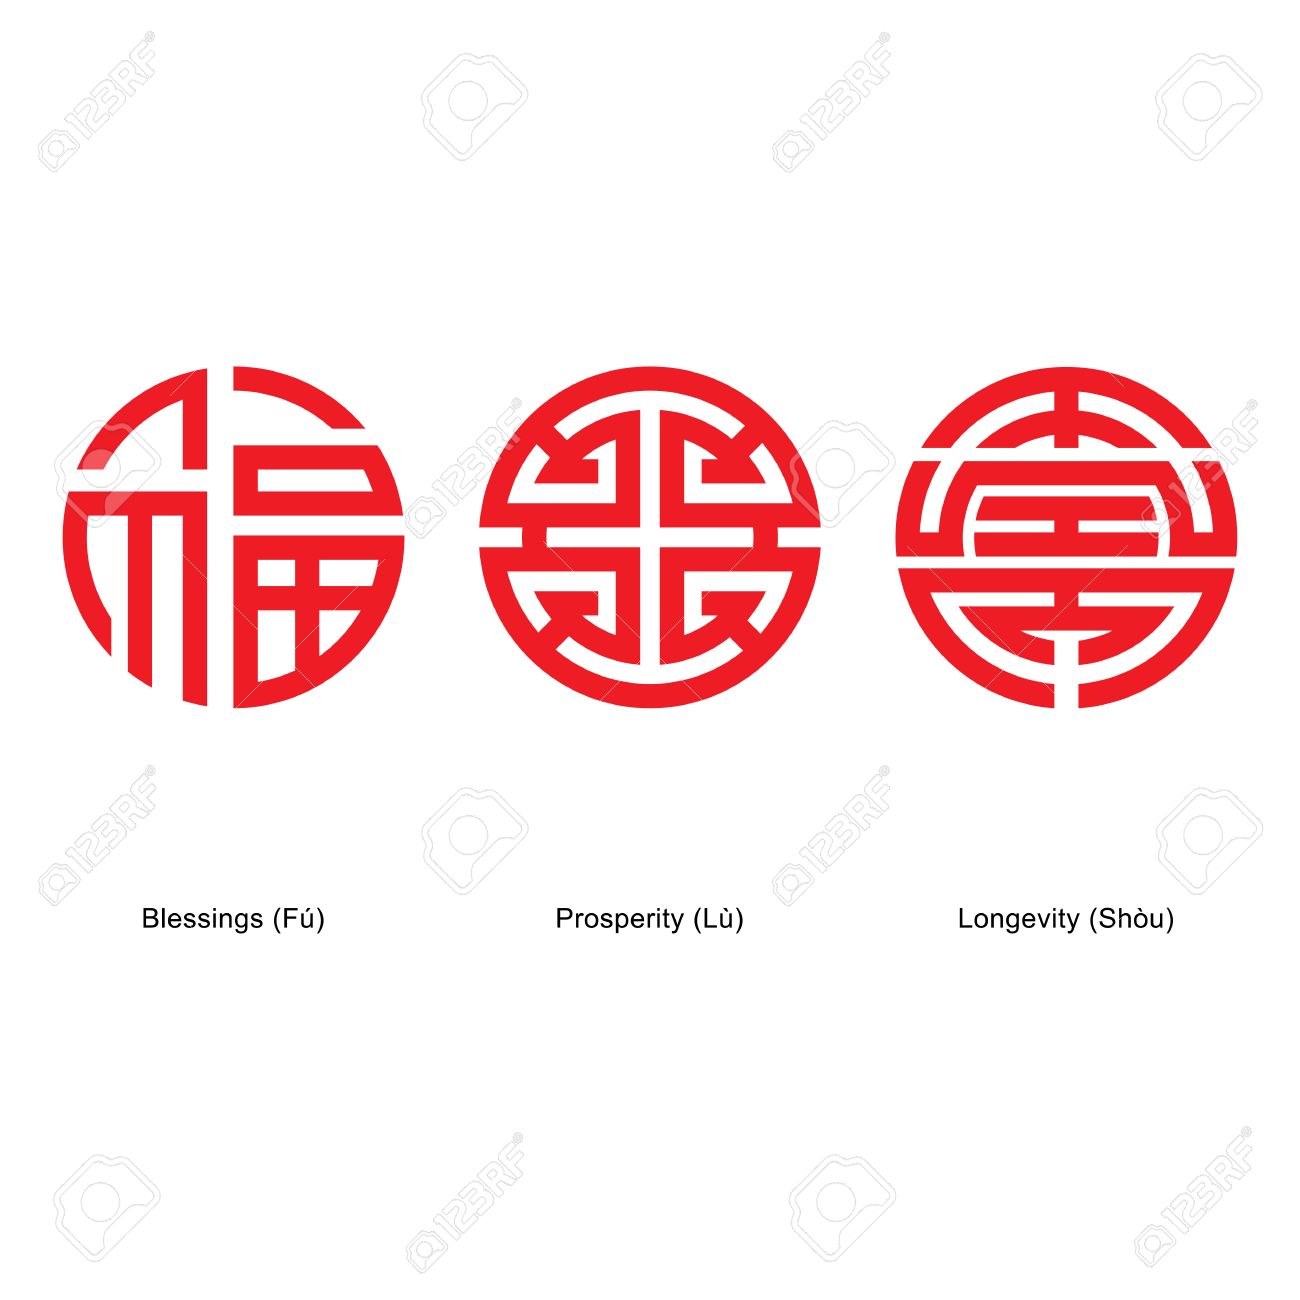 Chinese lucky symbols : Fu Lu Shou Stock Vector - 45911632